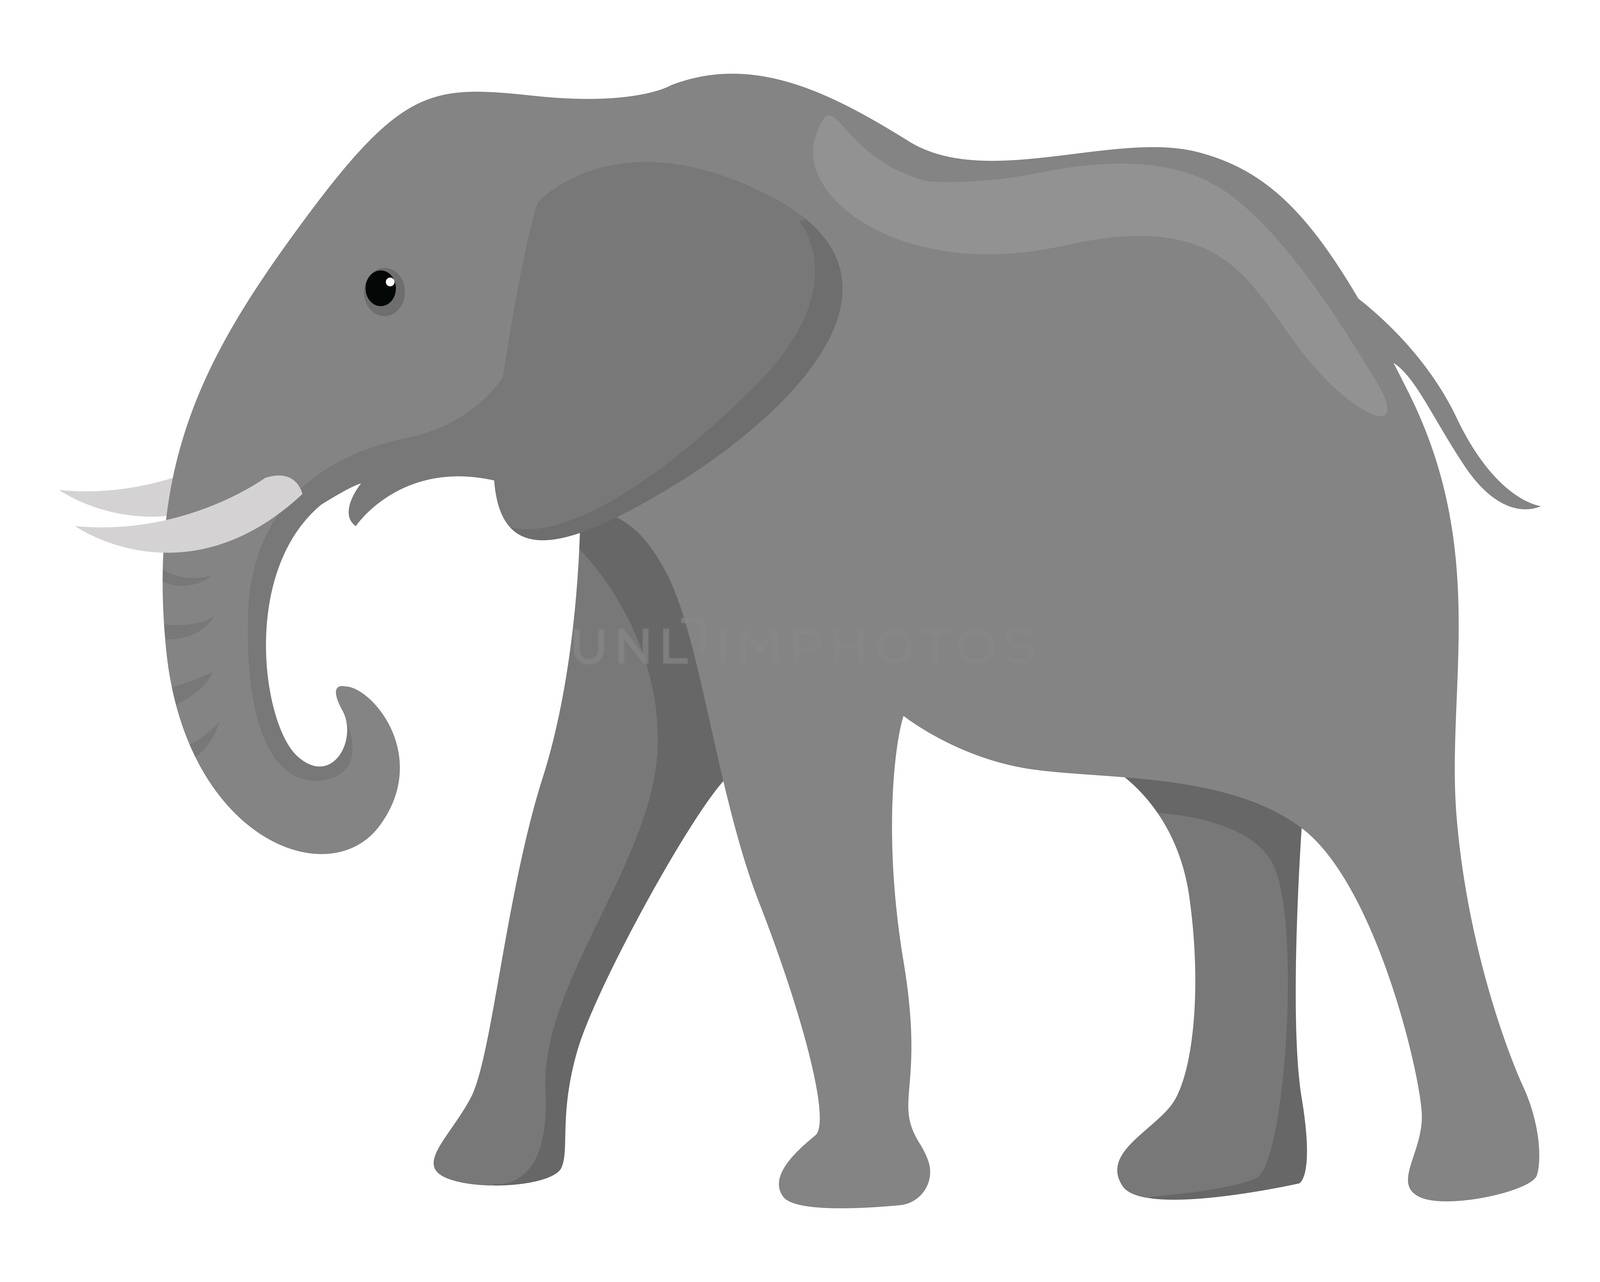 Big elephant , illustration, vector on white background by Morphart